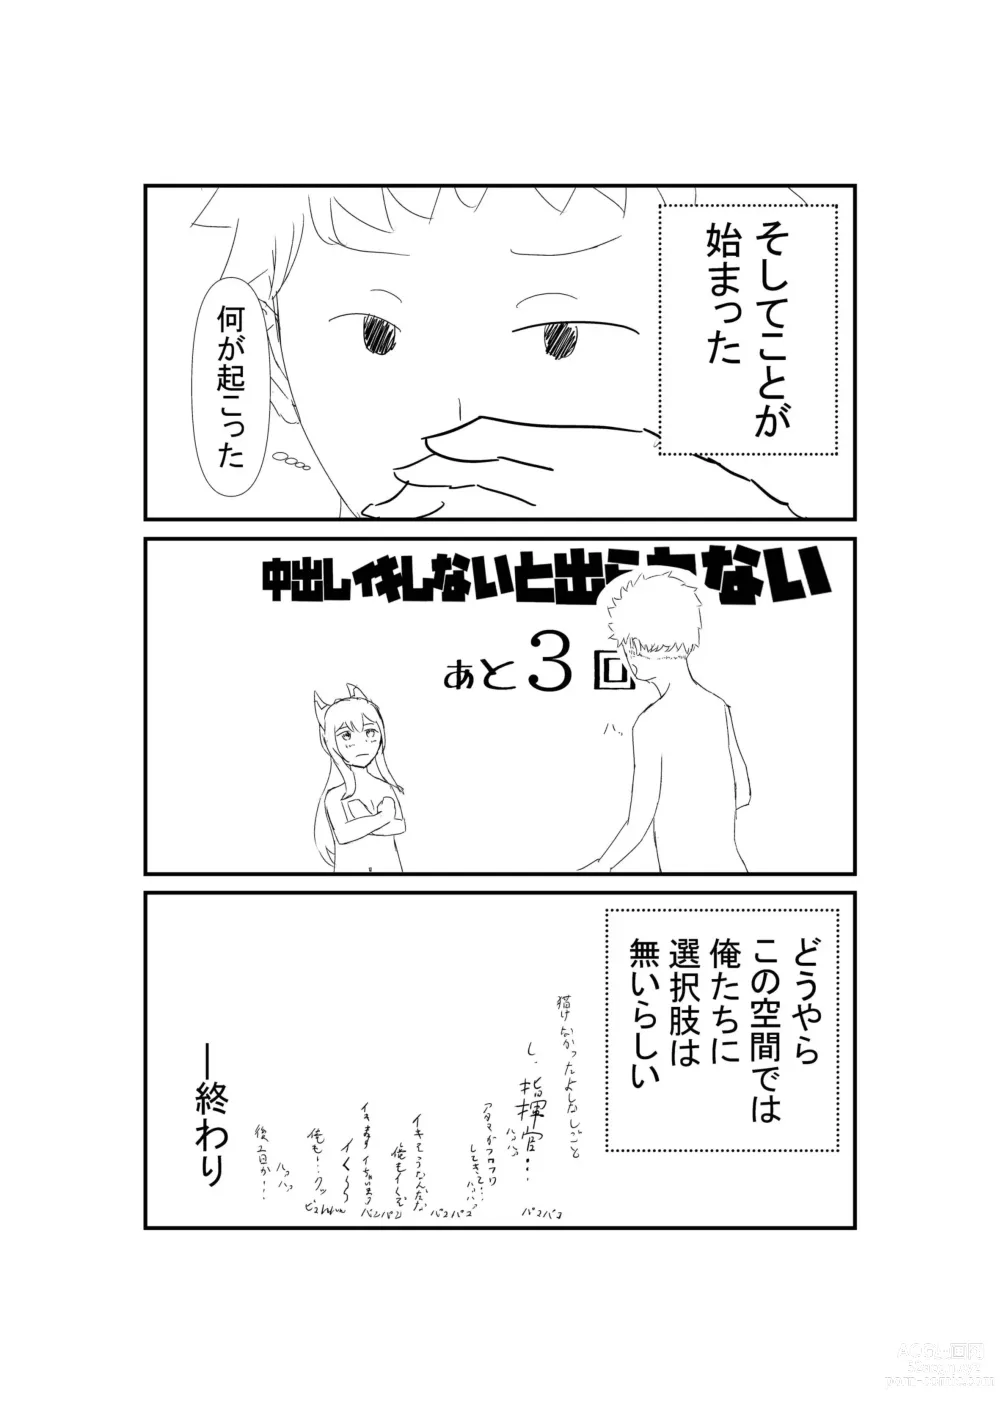 Page 14 of doujinshi Ayanami ni Wa o Kakete